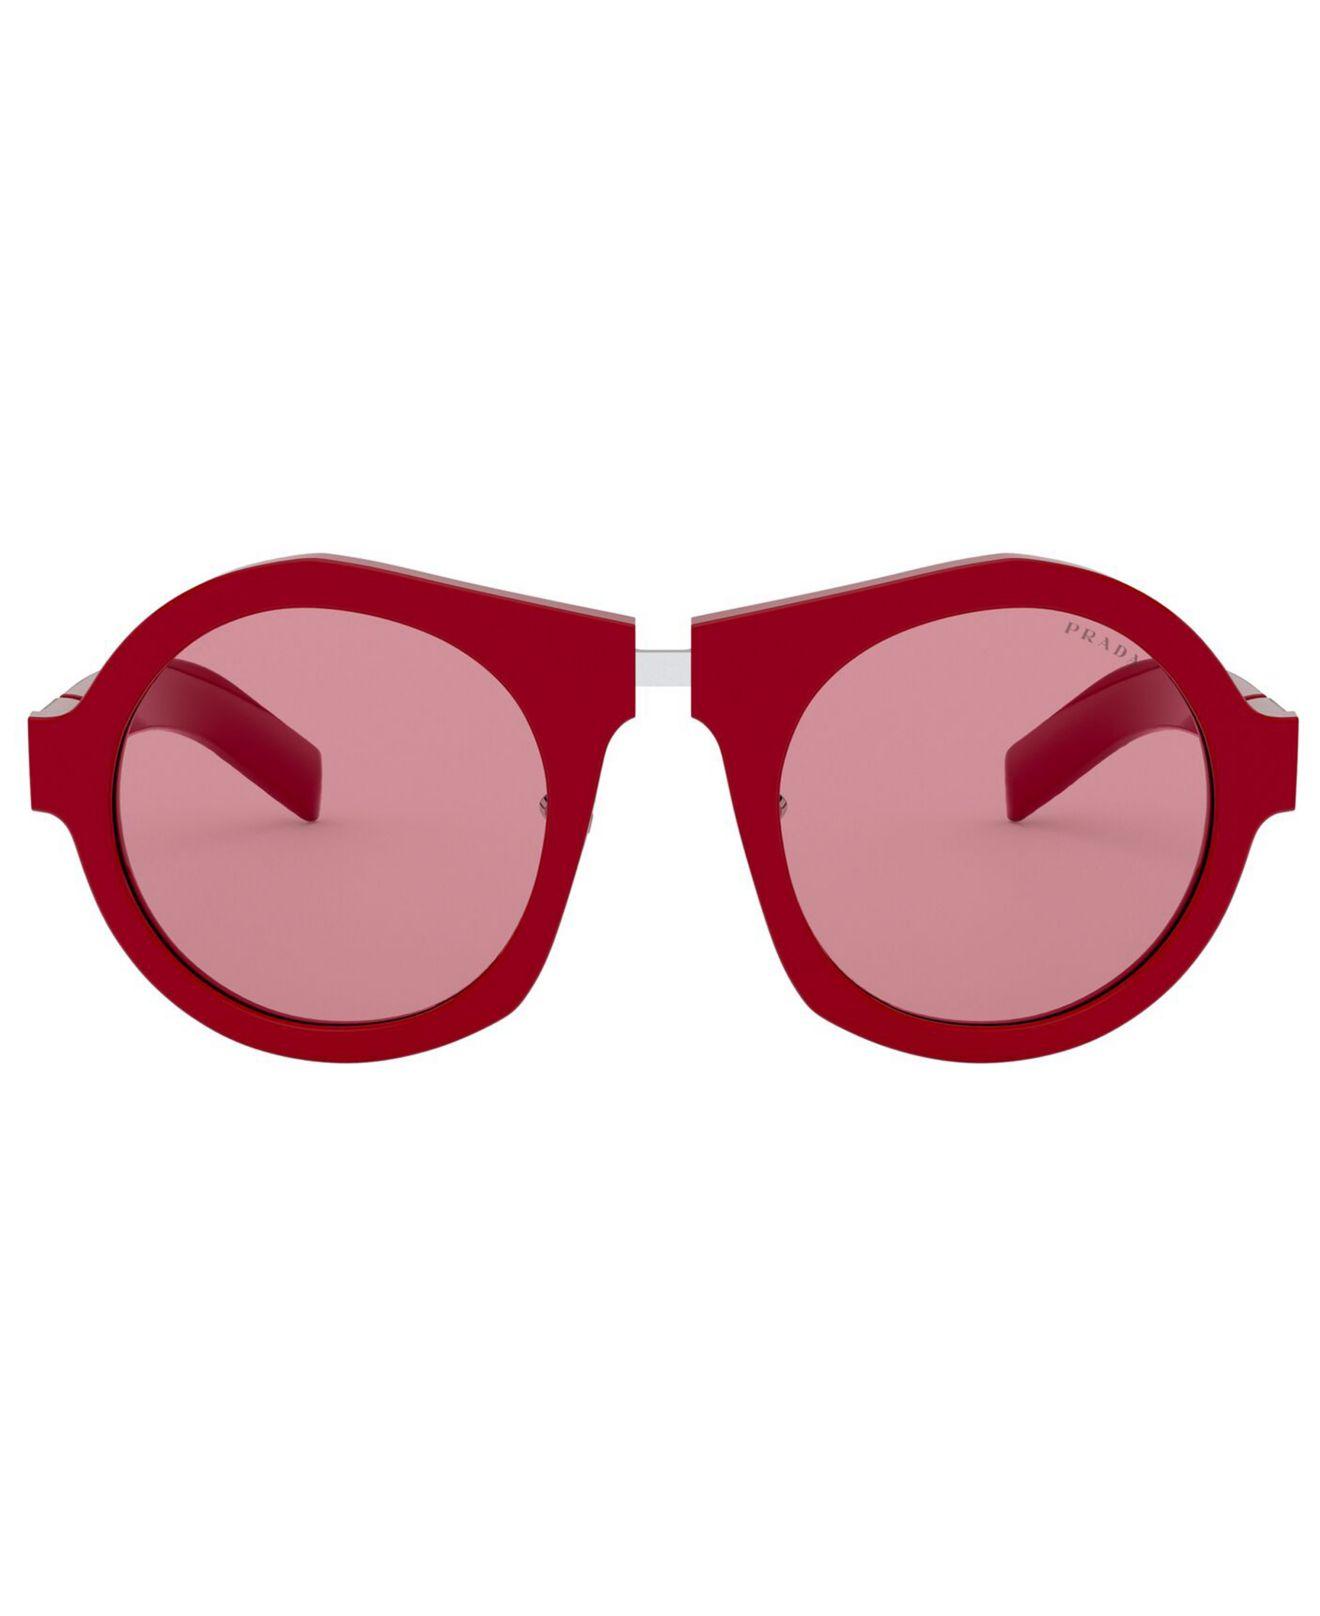 Prada Sunglasses, Pr 10xs in Red/Pink (Red) | Lyst